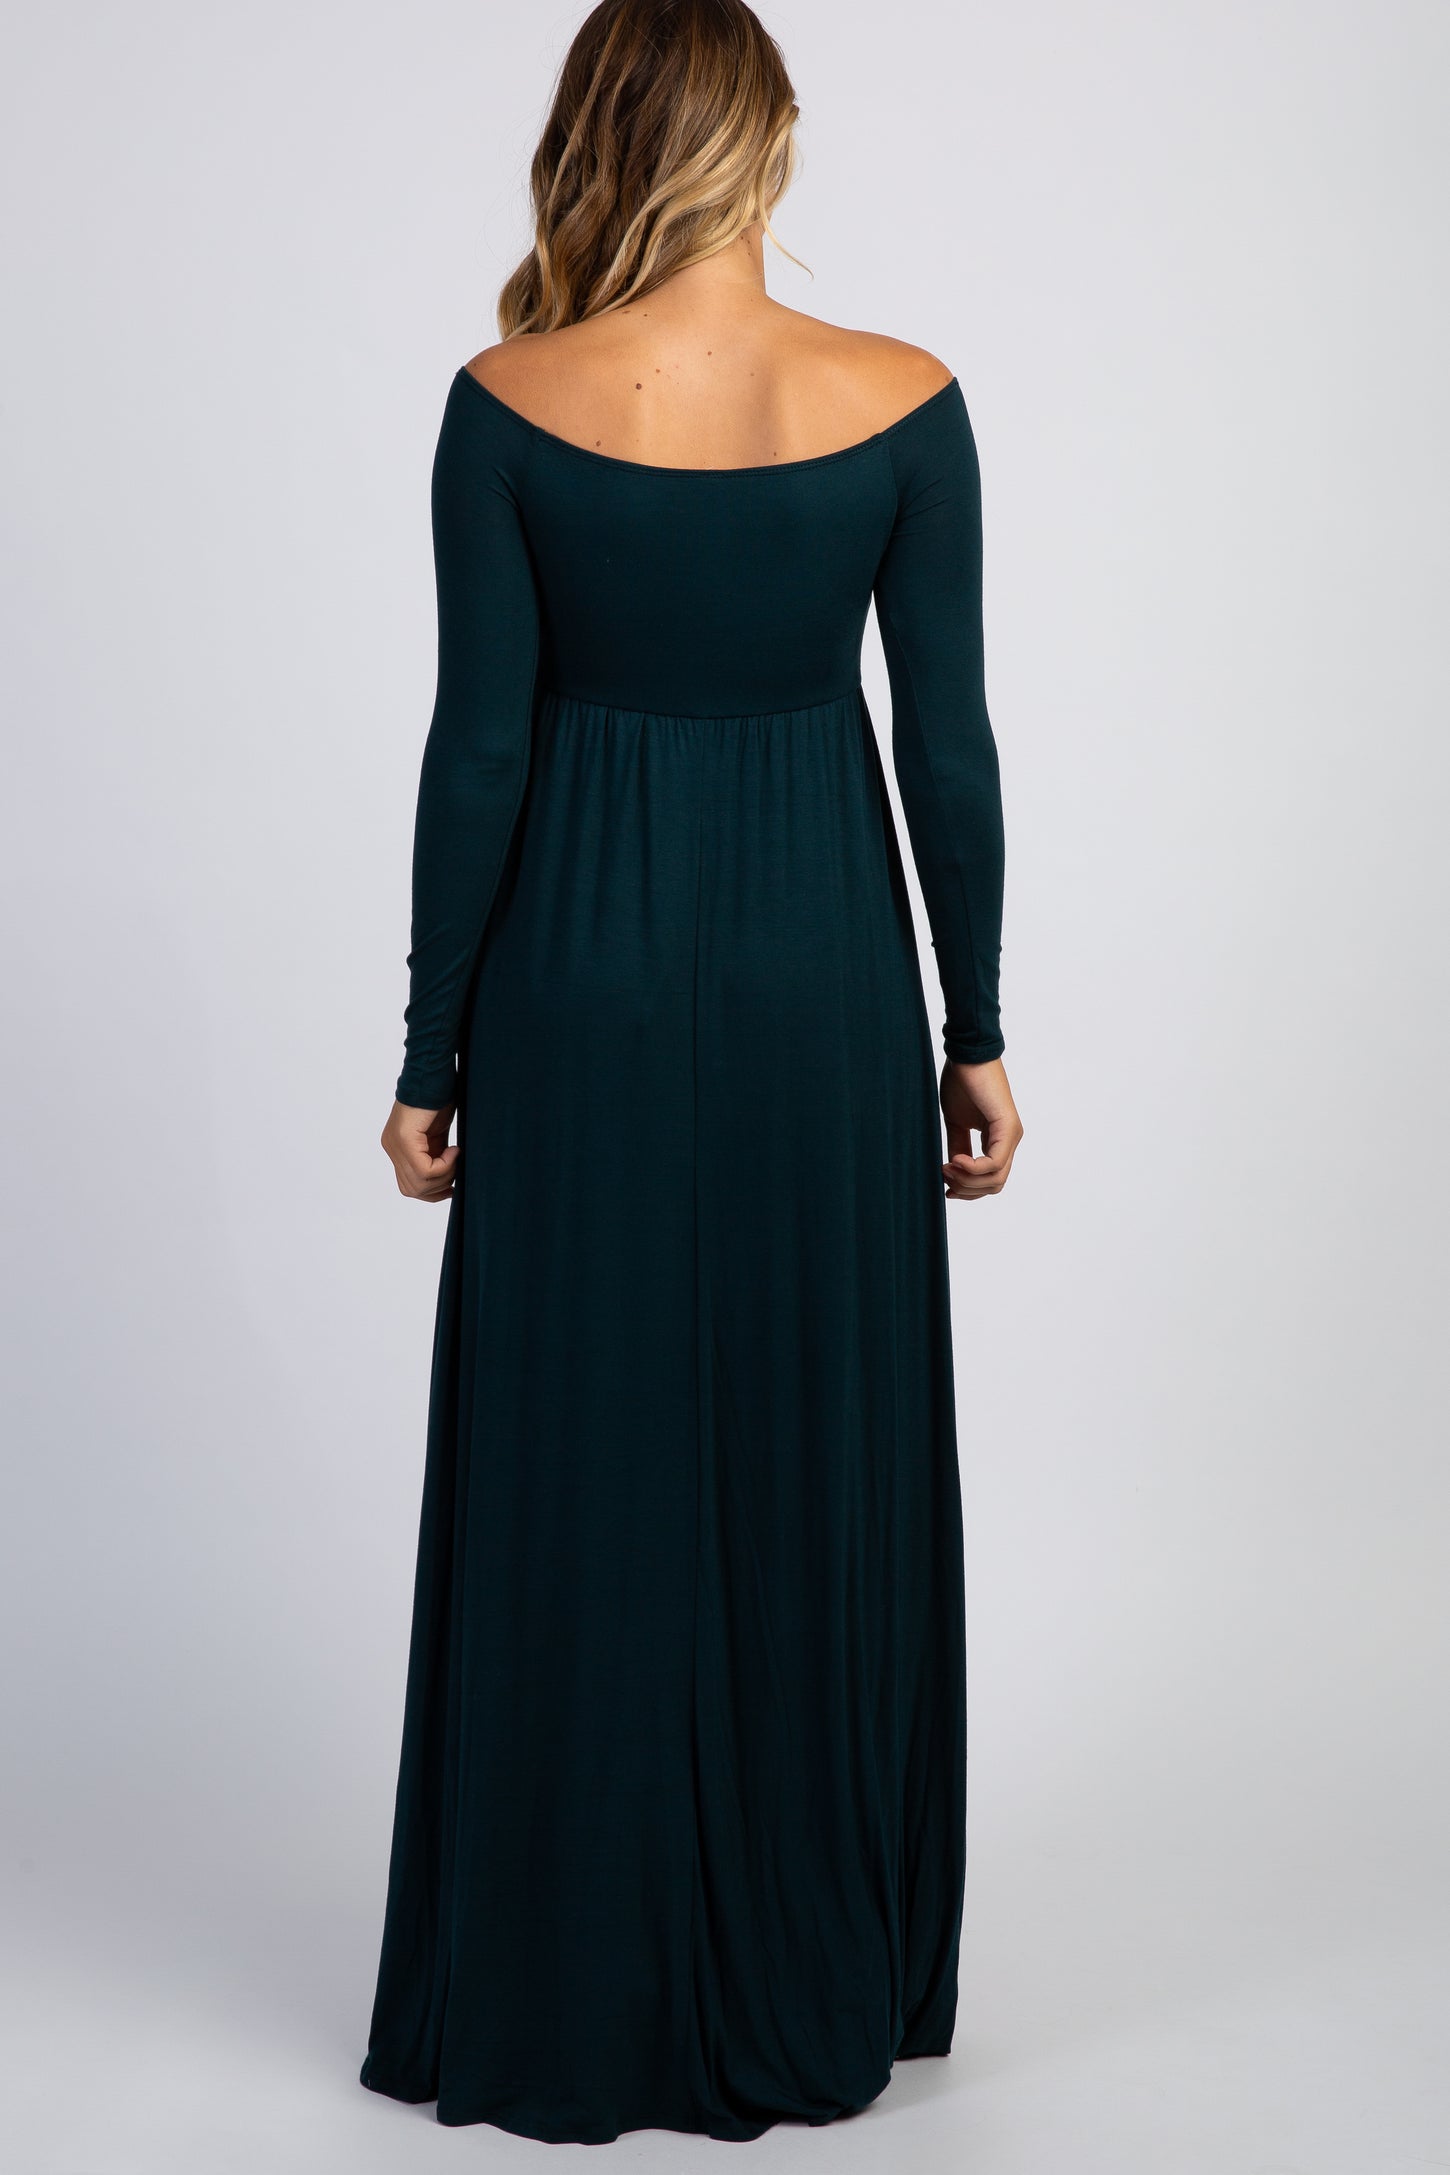 Green Midi Dress - Asymmetrical Dress - One-Shoulder Midi Dress - Lulus